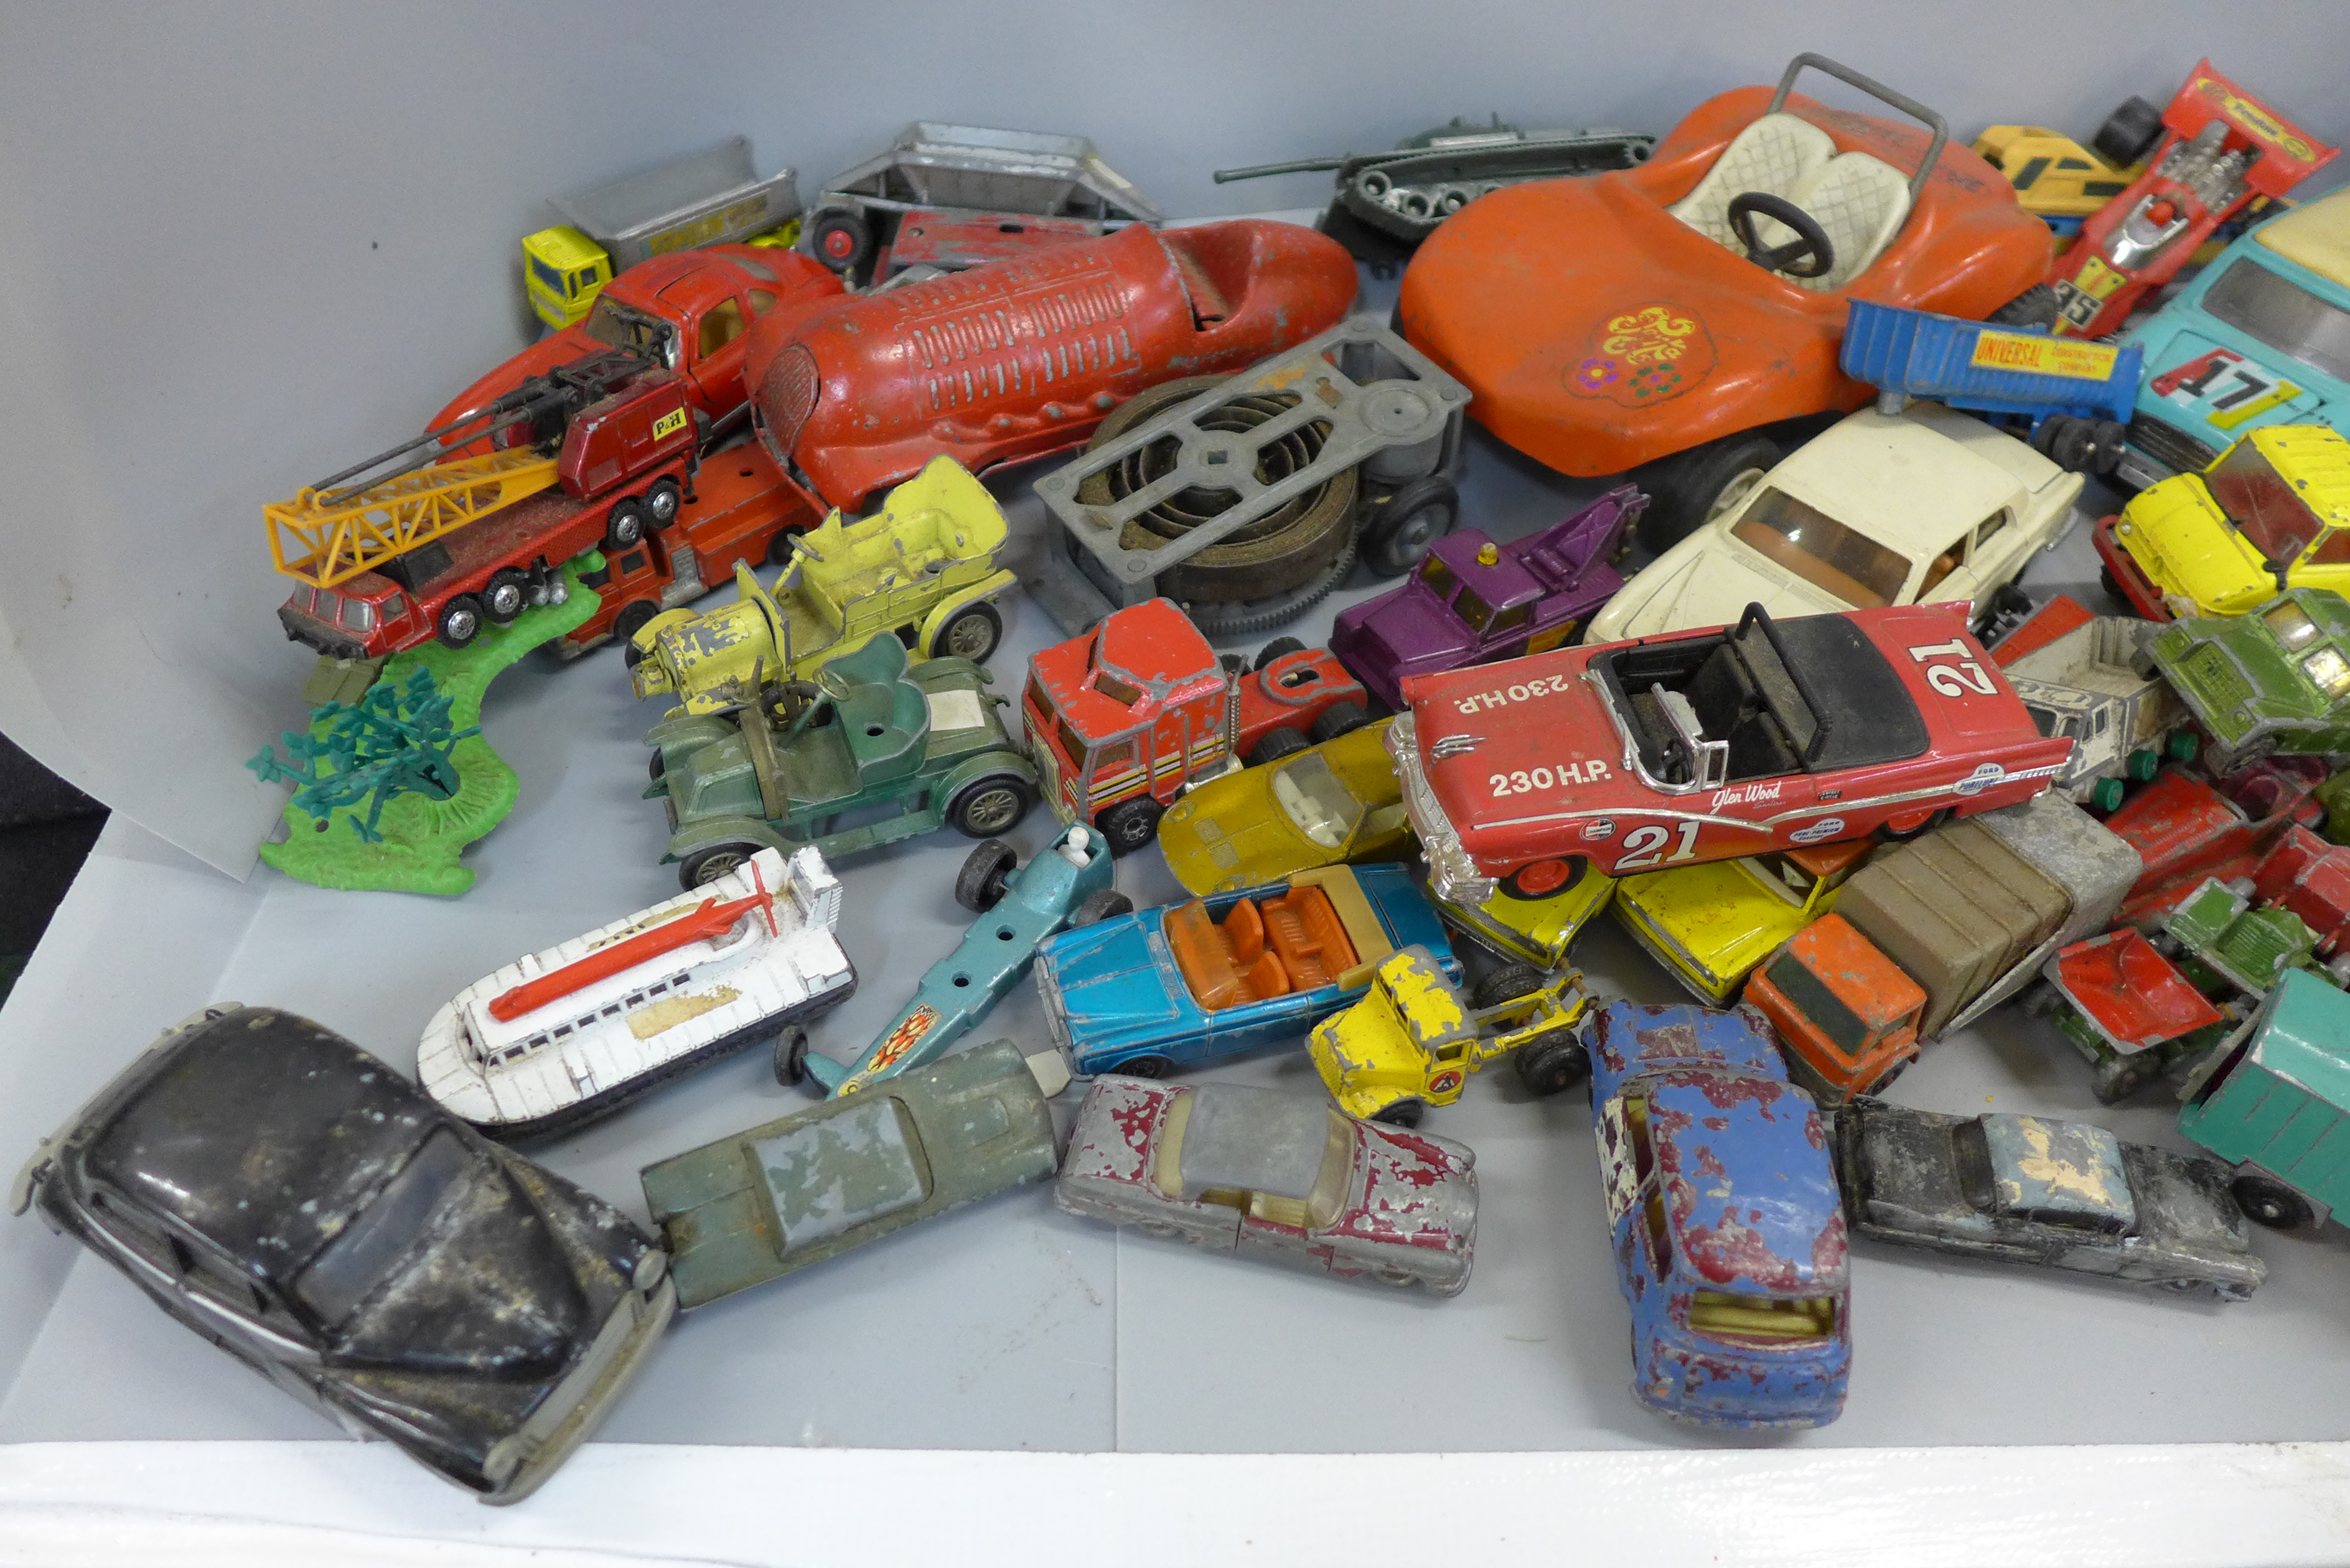 A case of vintage die-cast model vehicles, Dinky, Britains, Corgi, Matchbox, etc. - Image 5 of 5